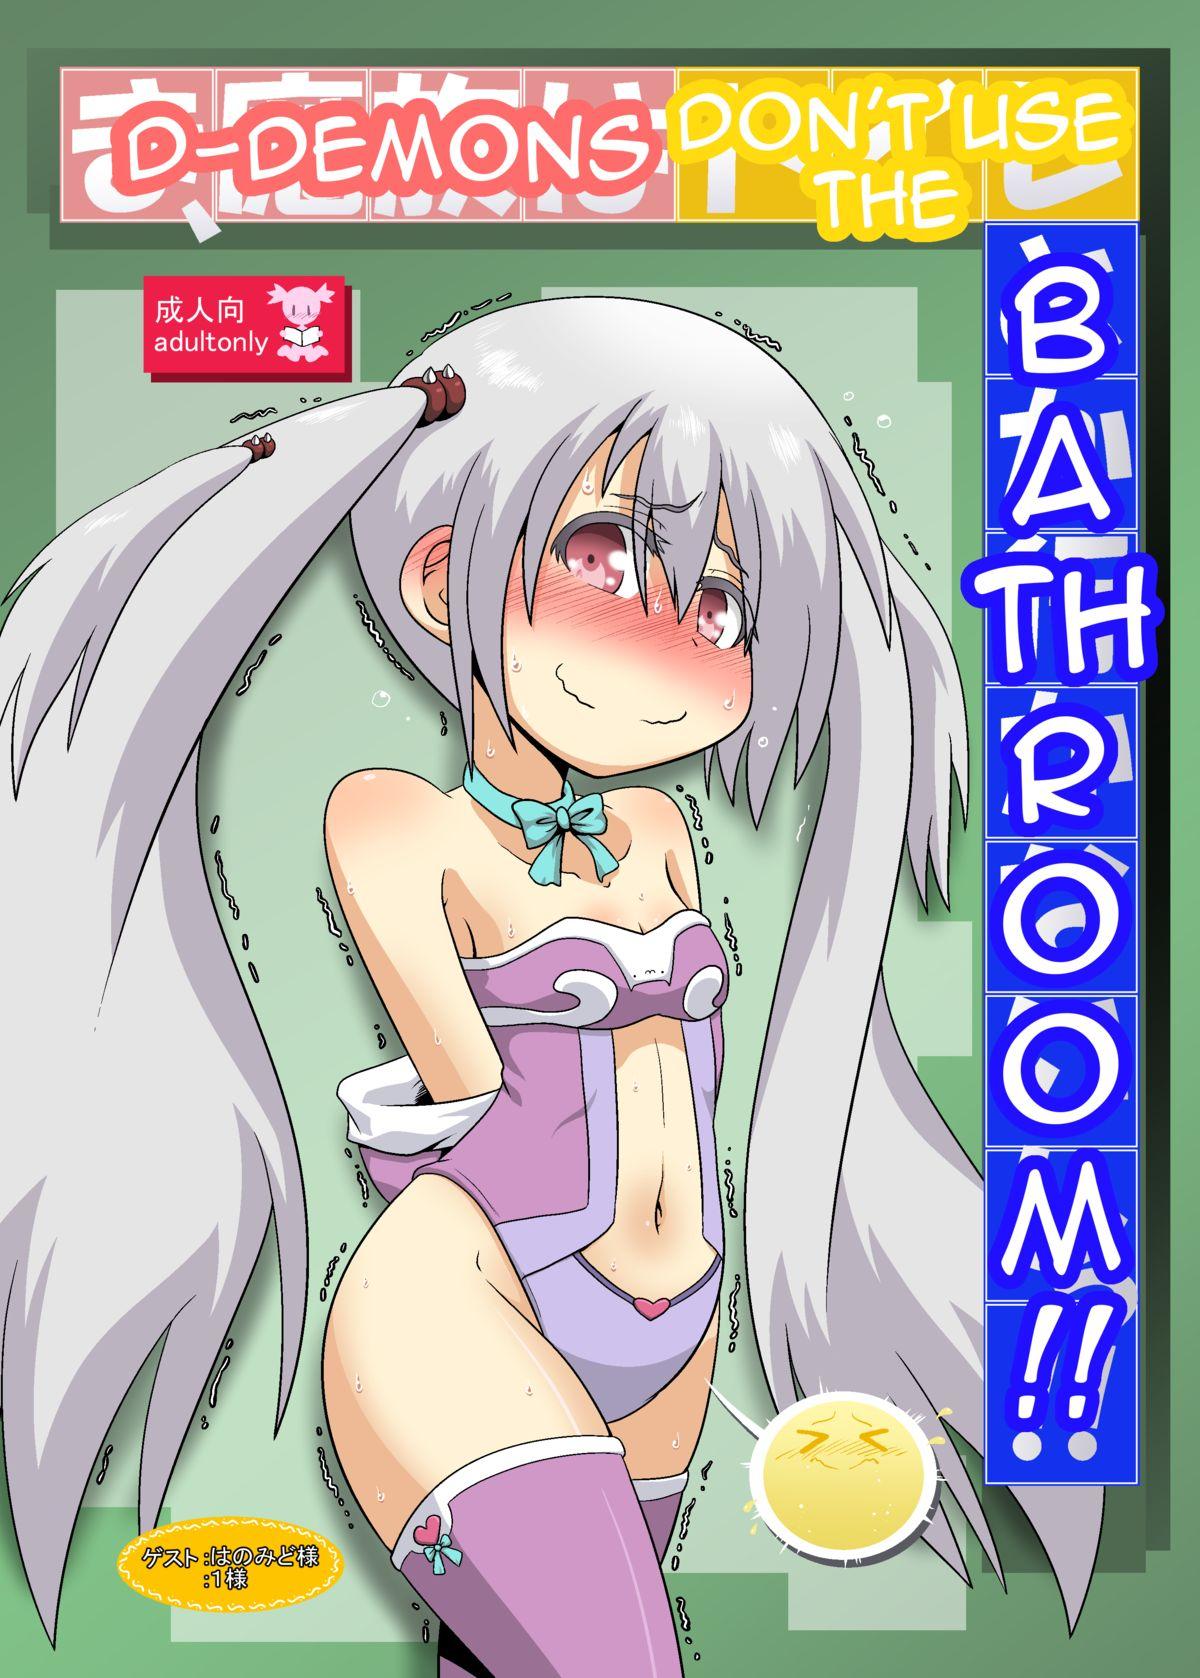 Ma, Mazoku wa Toilet toka Ikanaishi!! | D-Demons Don't use the Bathroom!! 0